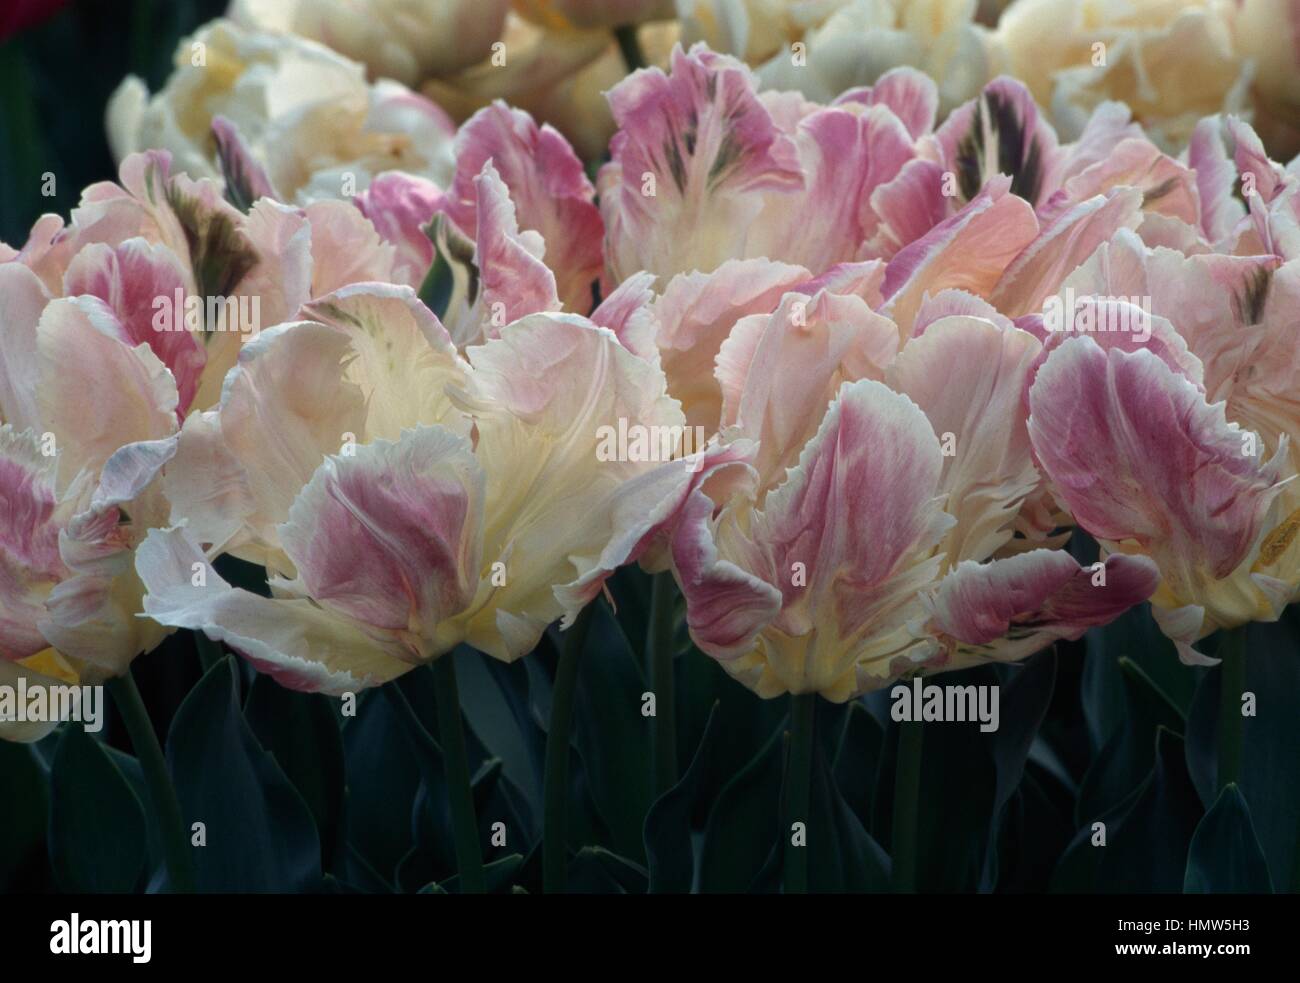 Parkiet Tulip (Tulipa Libretto Parrot), Liliaceae. Stock Photo